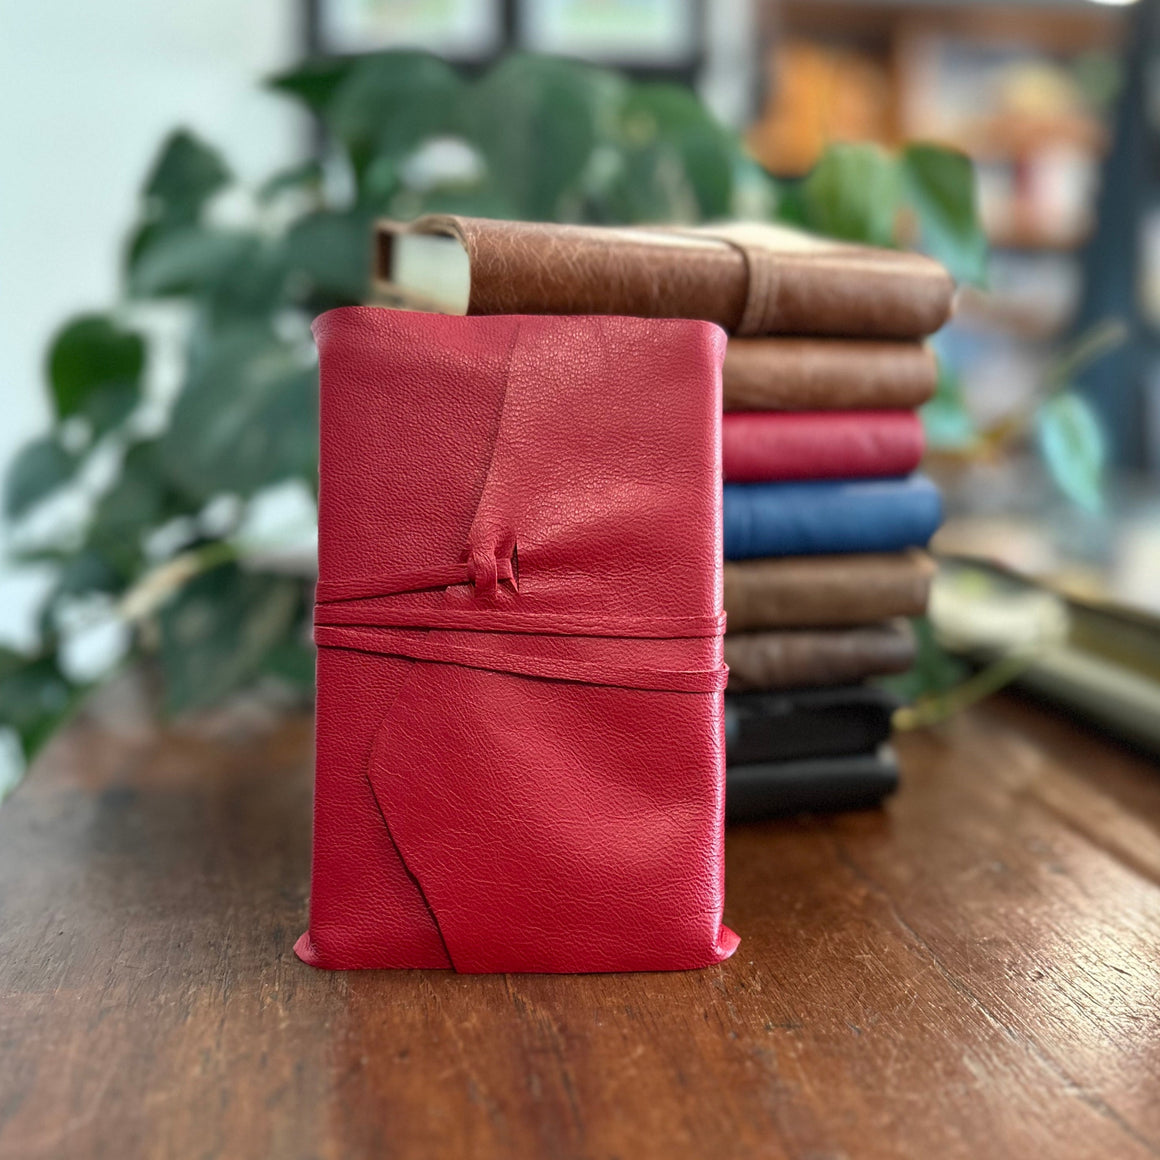 A mini leather journal i nChestnut colour 